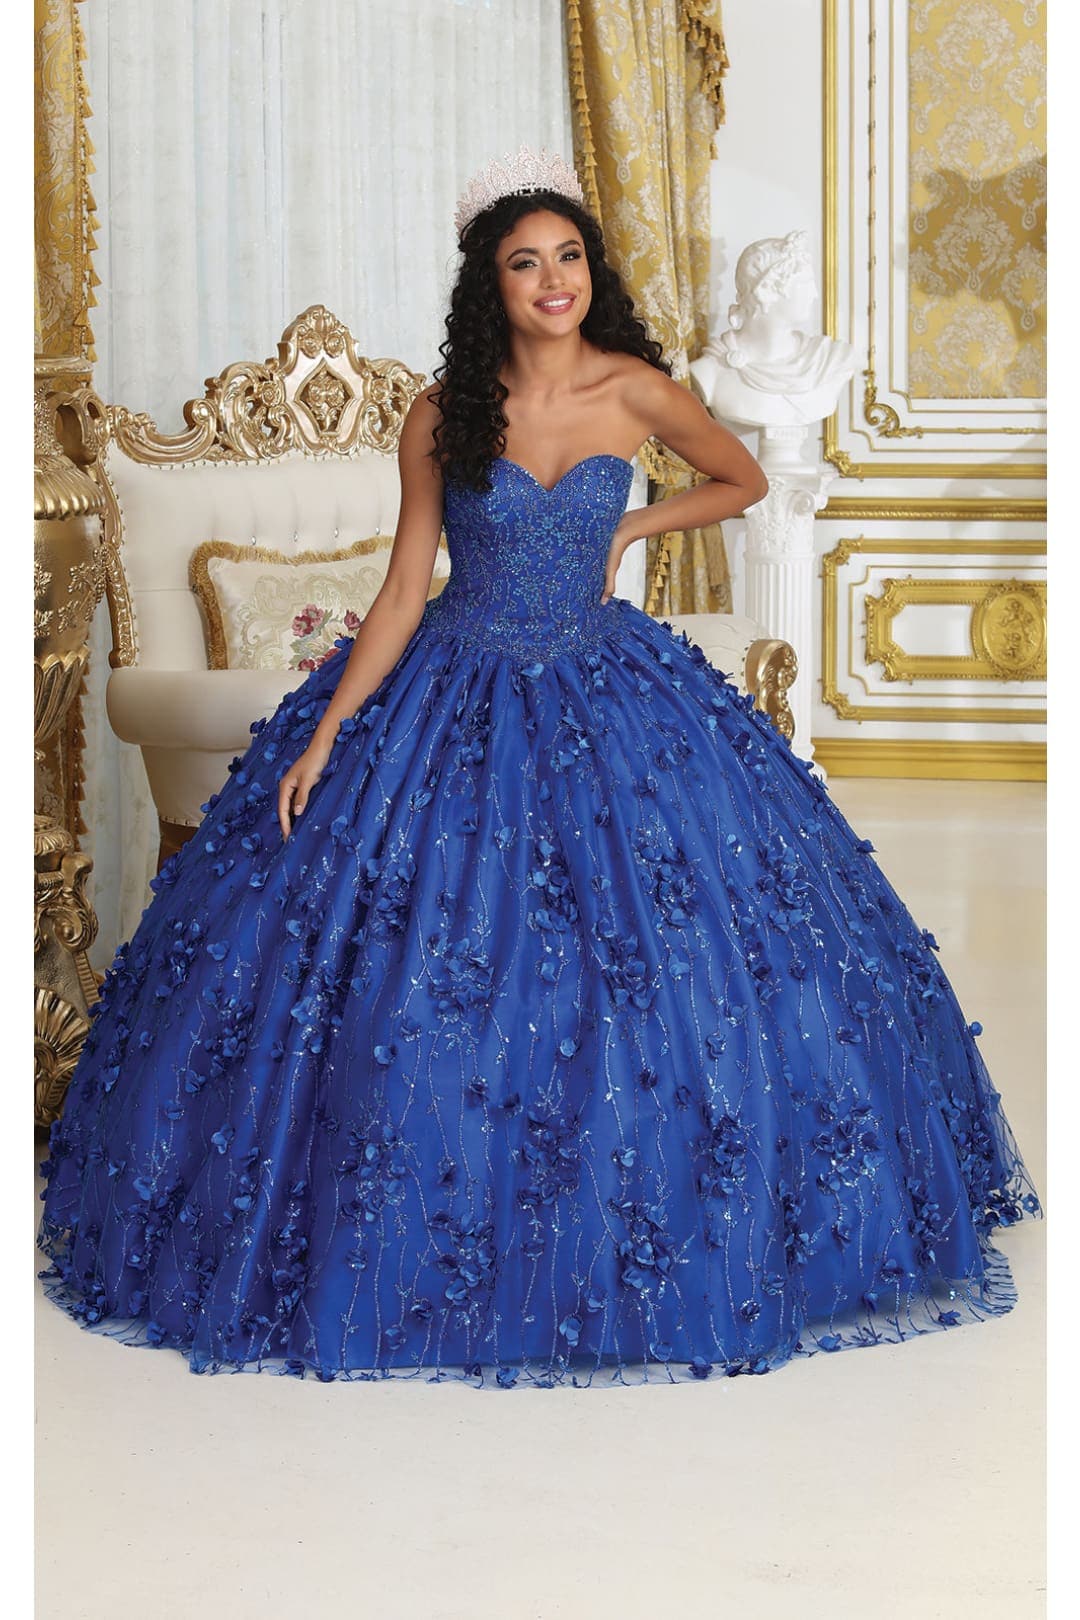 Layla K LK217 Sweetheart 3D Floral Corset Quinceanera Ball Gown - ROYAL BLUE / 4 - Dress